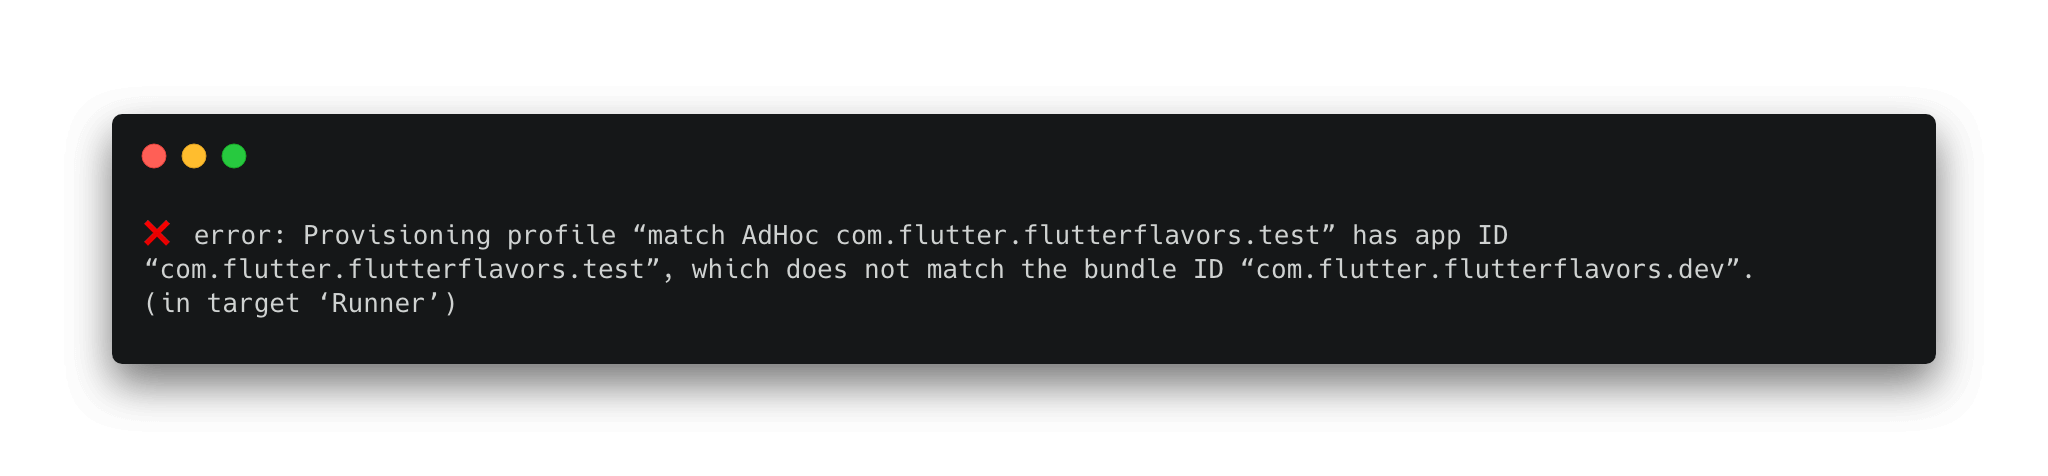 ❌ error: Provisioning profile “match AdHoc com.flutter.flutterflavors.test” has app ID “com.flutter.flutterflavors.test”, which does not match the bundle ID “com.flutter.flutterflavors.dev”. (in target ‘Runner’)